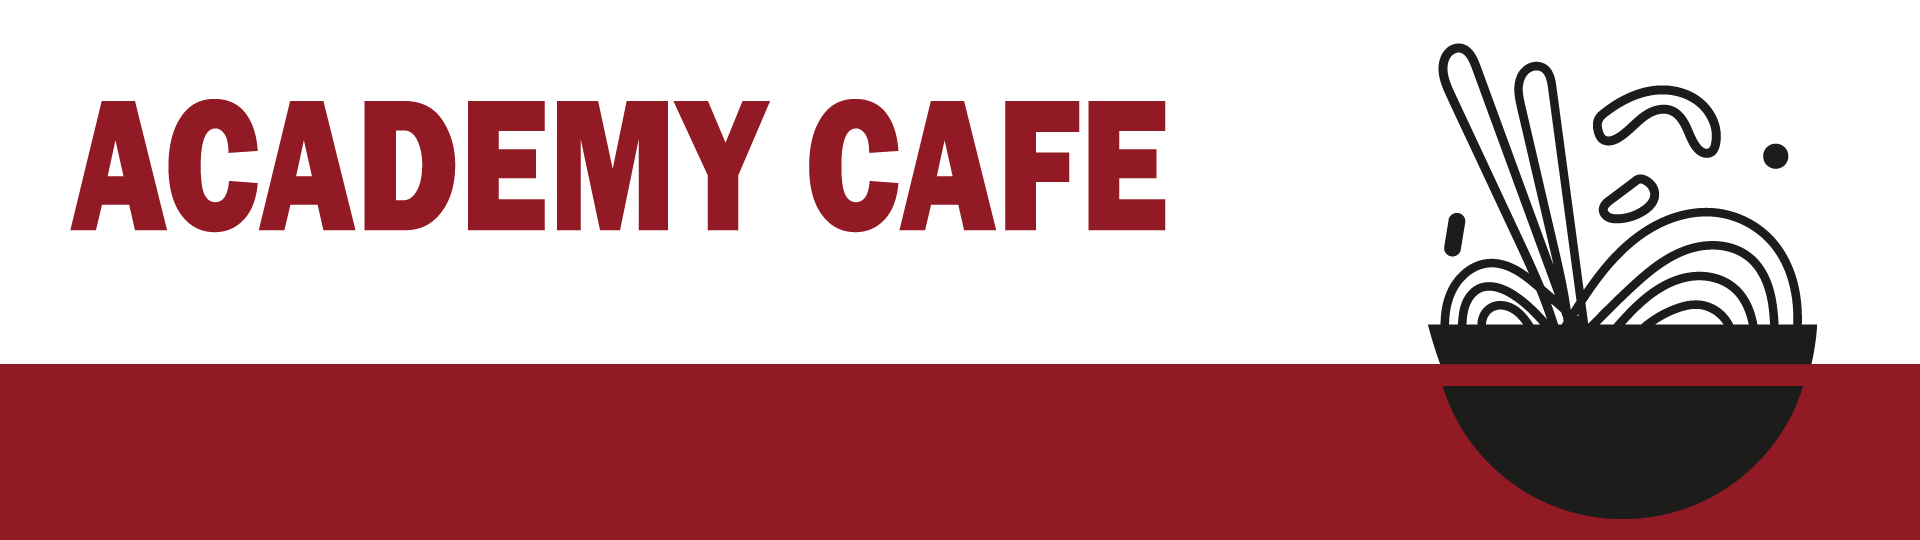 Academy Cafe Banner